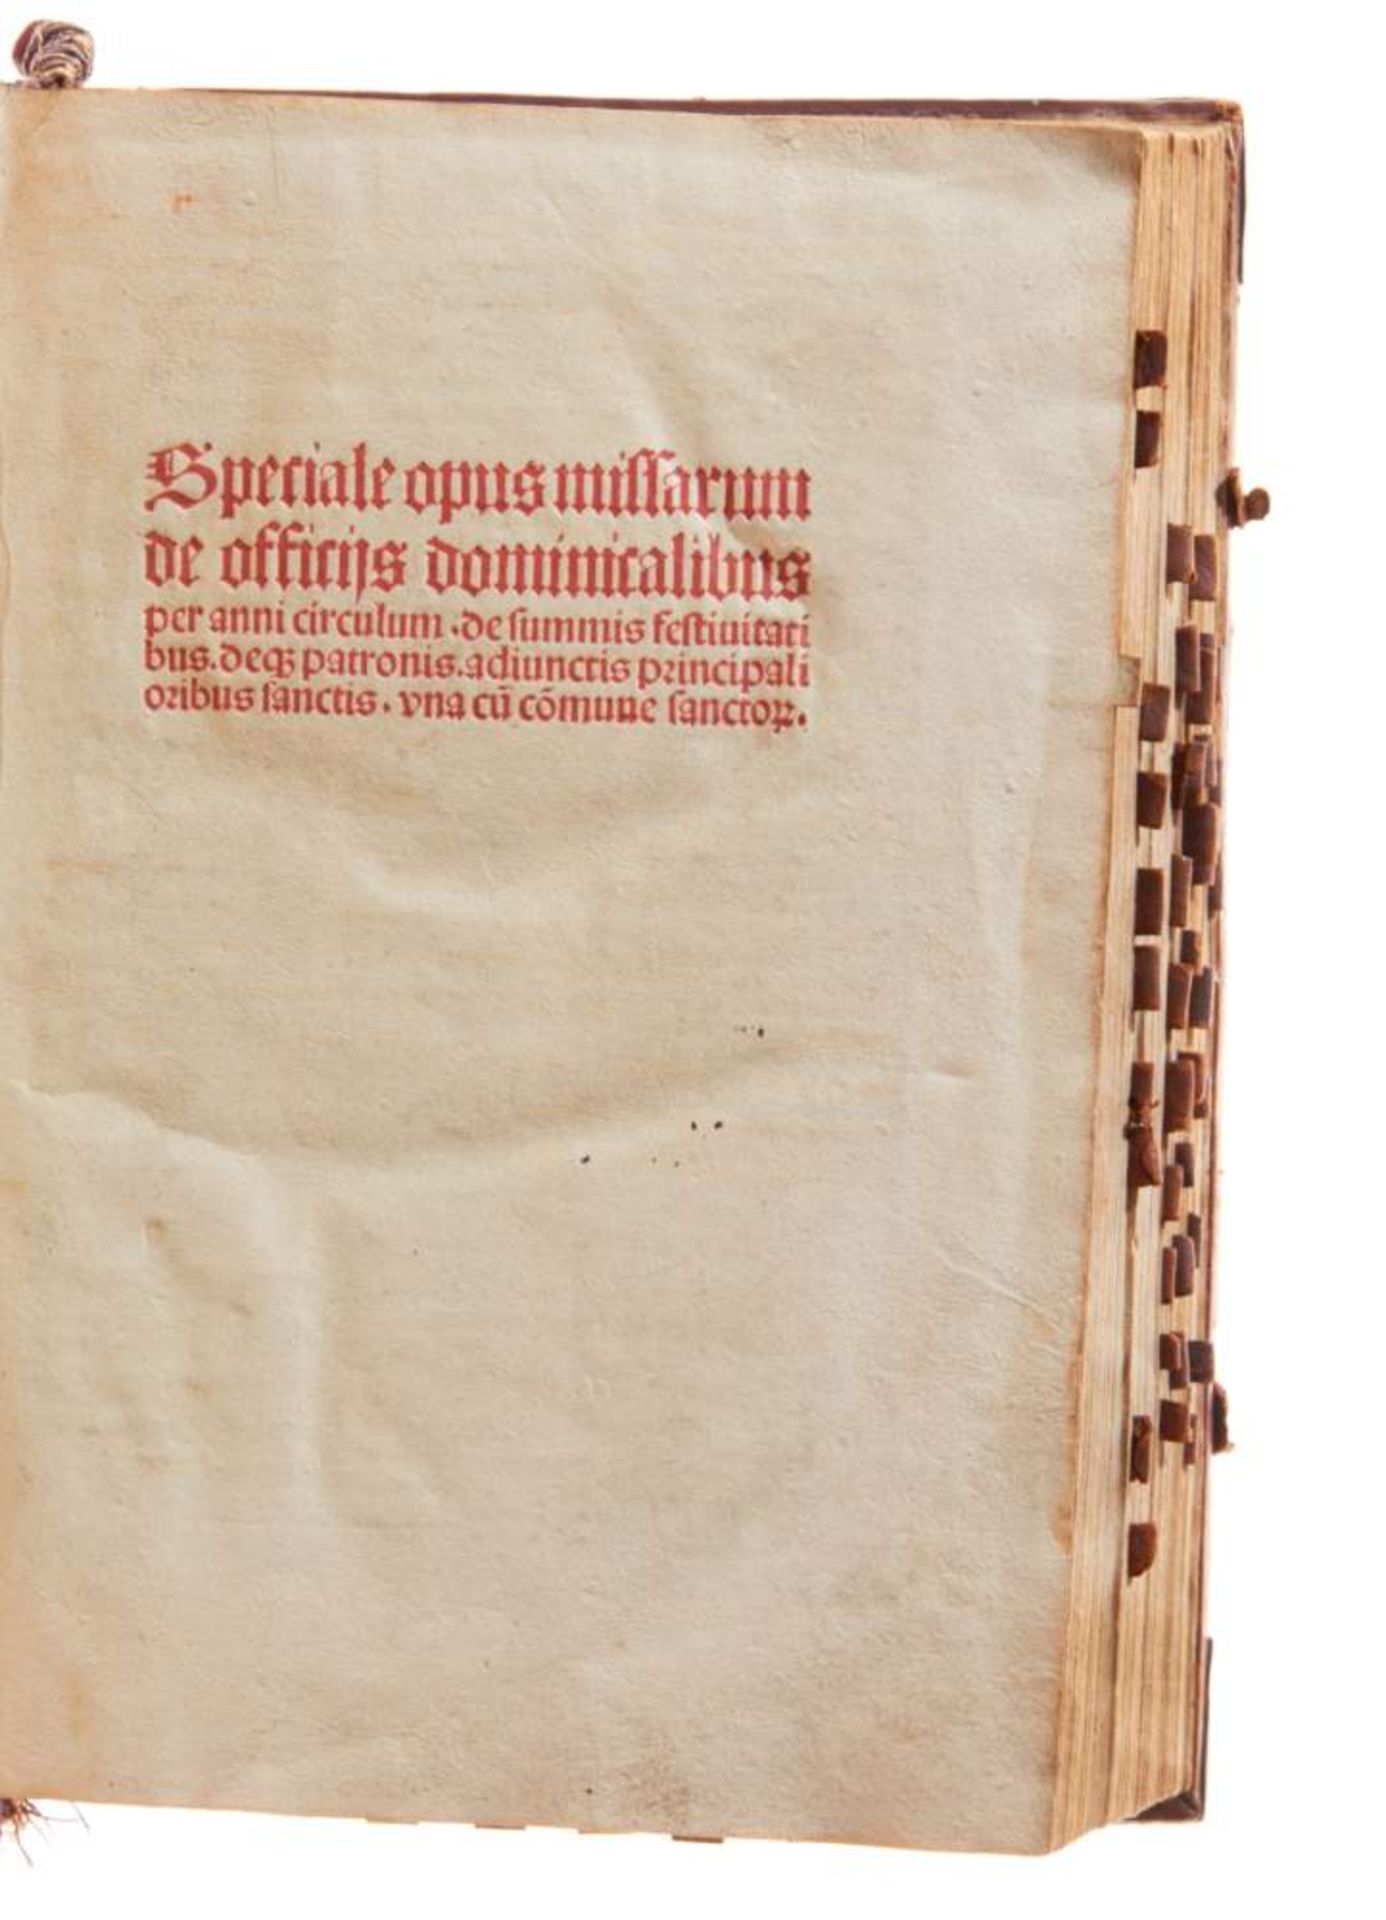 Missale speciale. O. O. und Dr. (Straßburg, Johann Grüninger), 13. November 1493. Fol. Mit 2 - Bild 3 aus 5